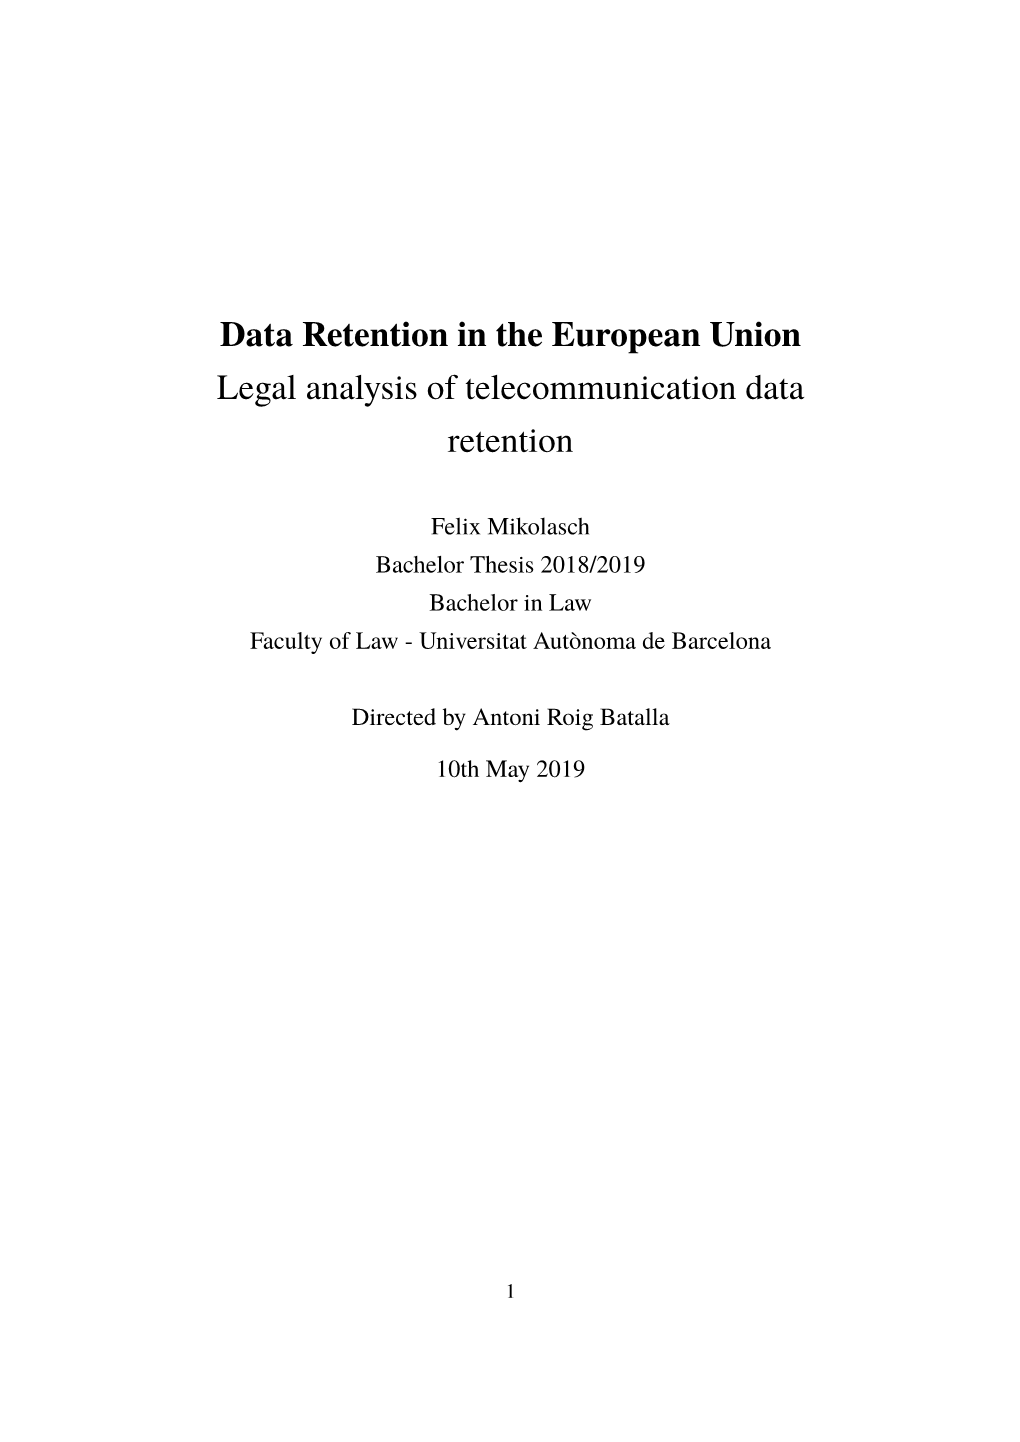 Data Retention in the European Union Legal Analysis of Telecommunication Data Retention